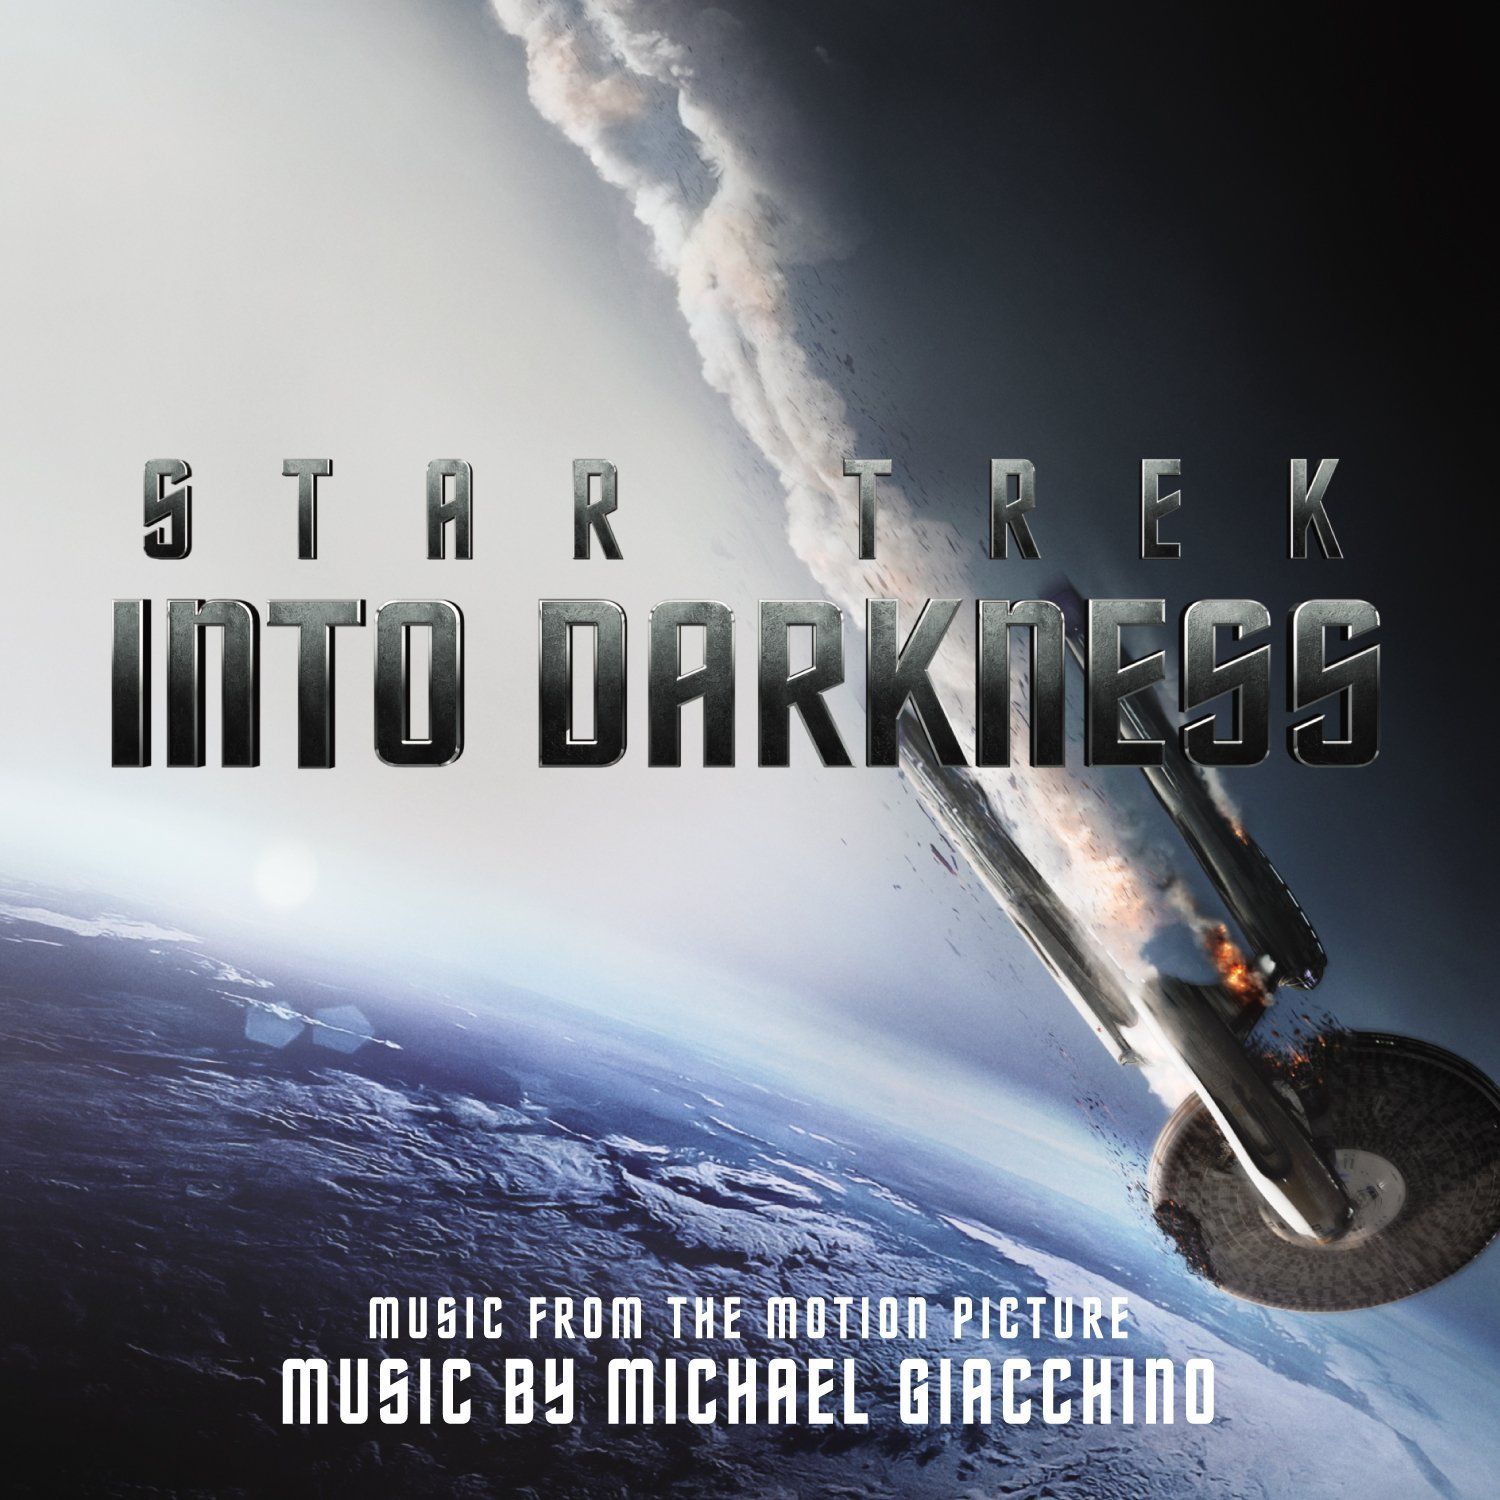 star trek into darkness deluxe edition soundtrack